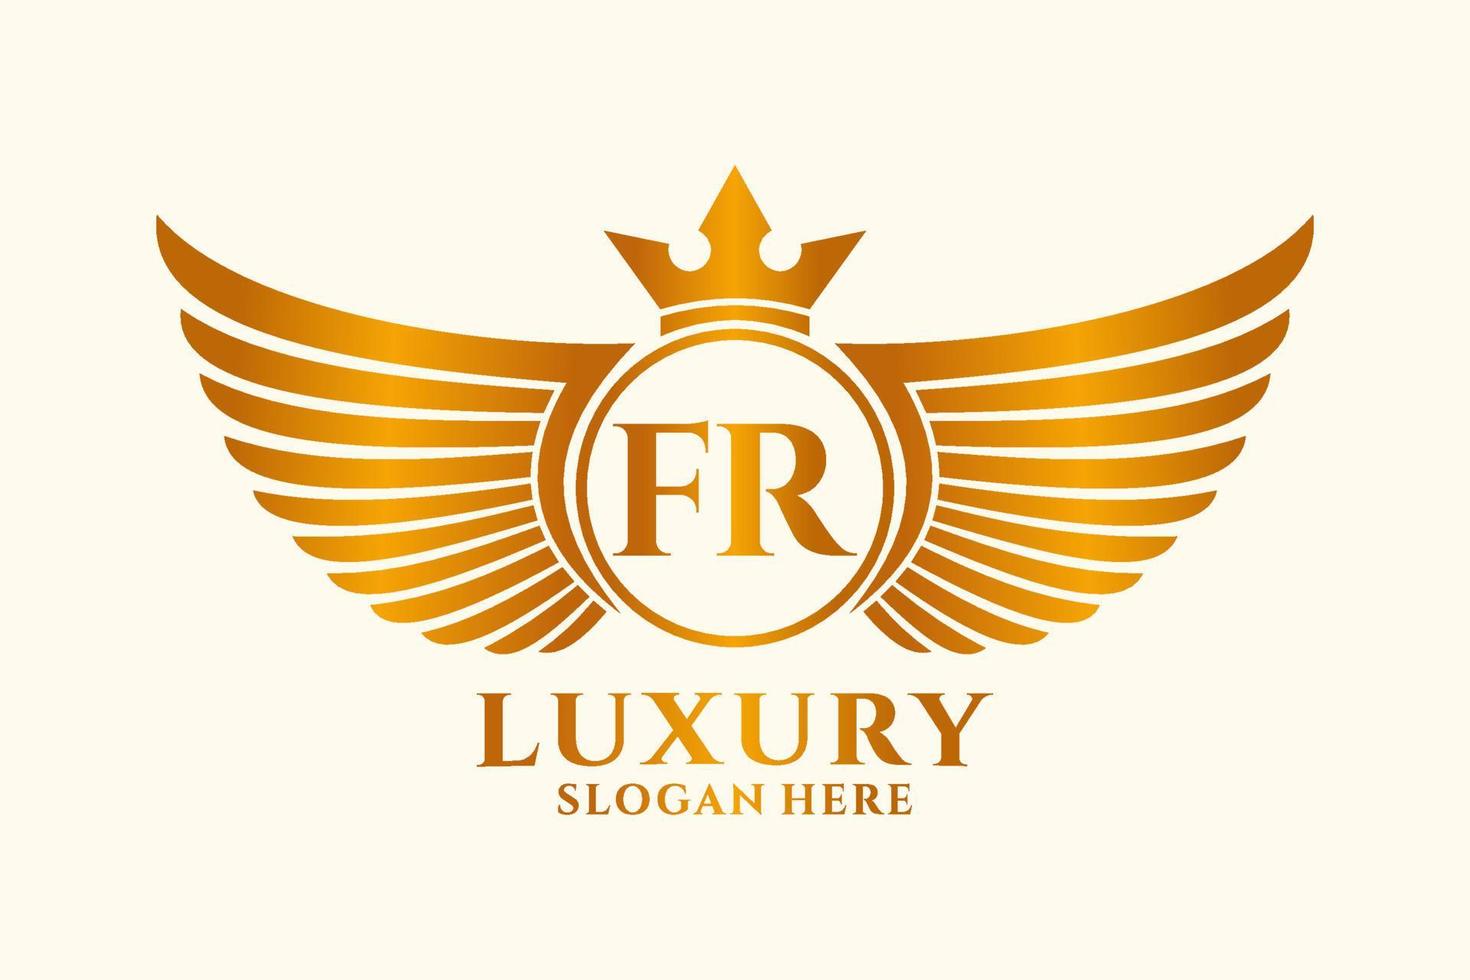 luxe Koninklijk vleugel brief vanaf kam goud kleur logo vector, zege logo, kam logo, vleugel logo, vector logo sjabloon.